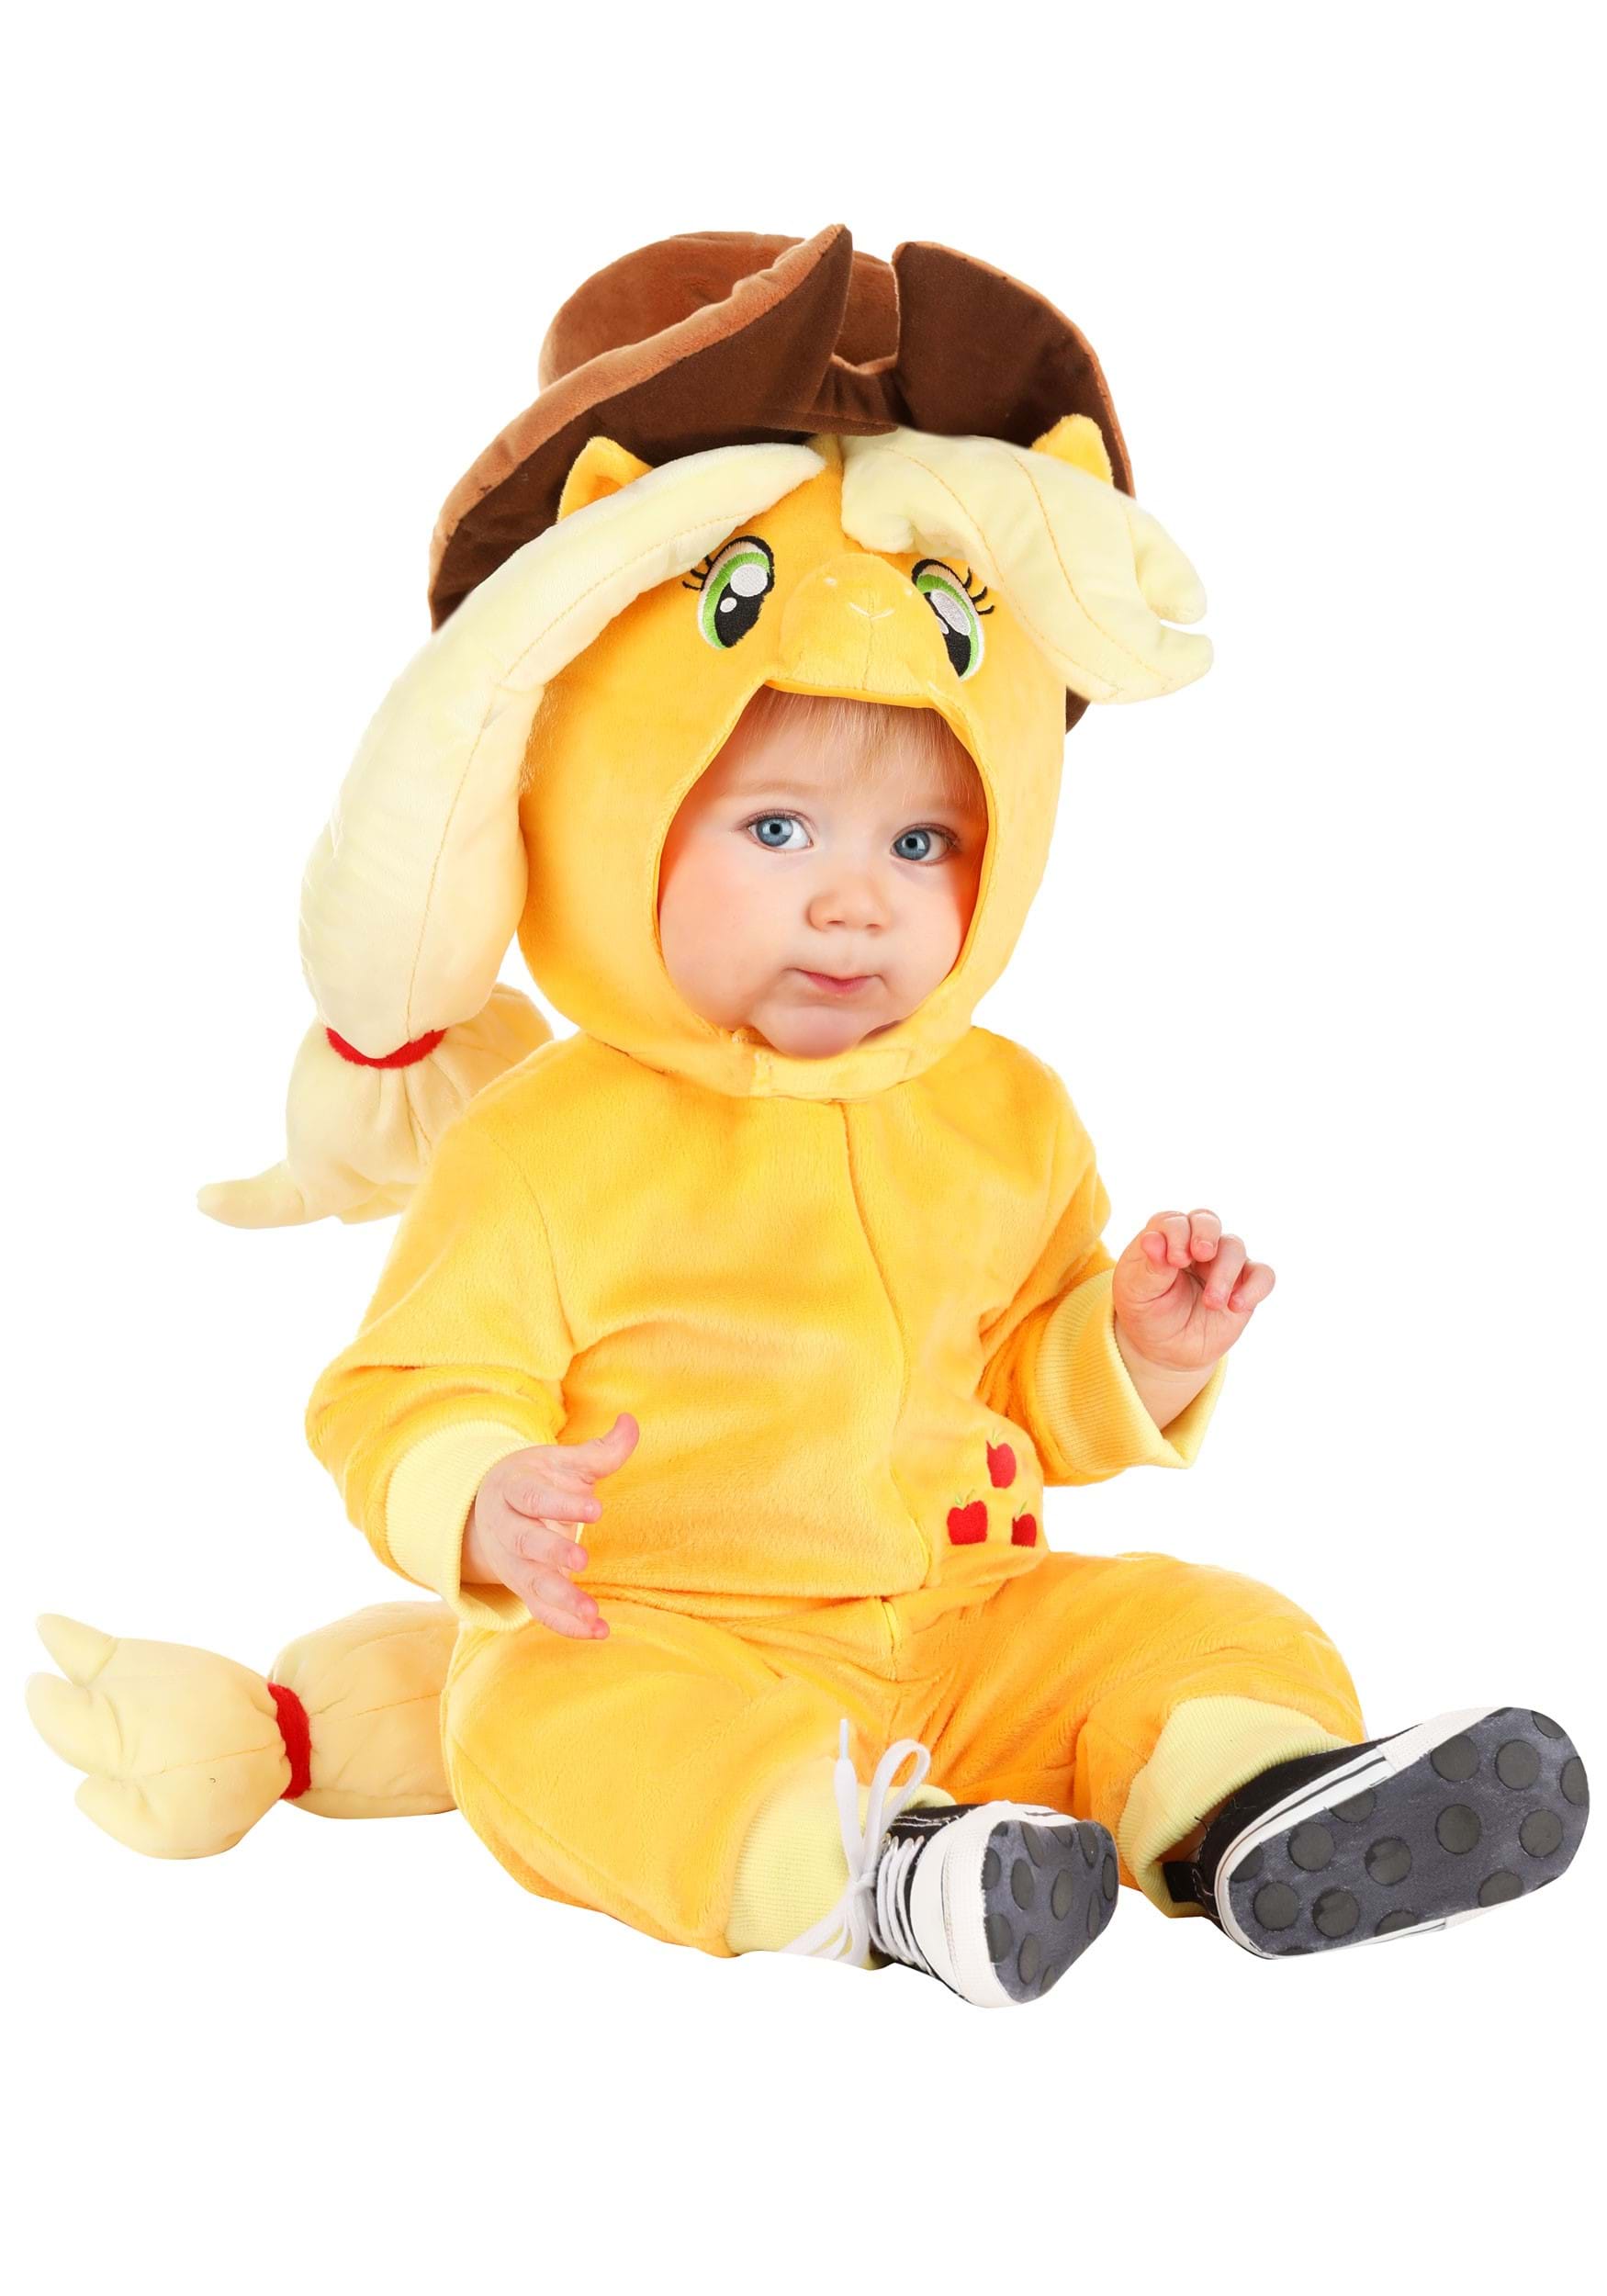 Photos - Fancy Dress Hasbro FUN Costumes Applejack My Little Pony Infant's Costume Orange/Yellow F 